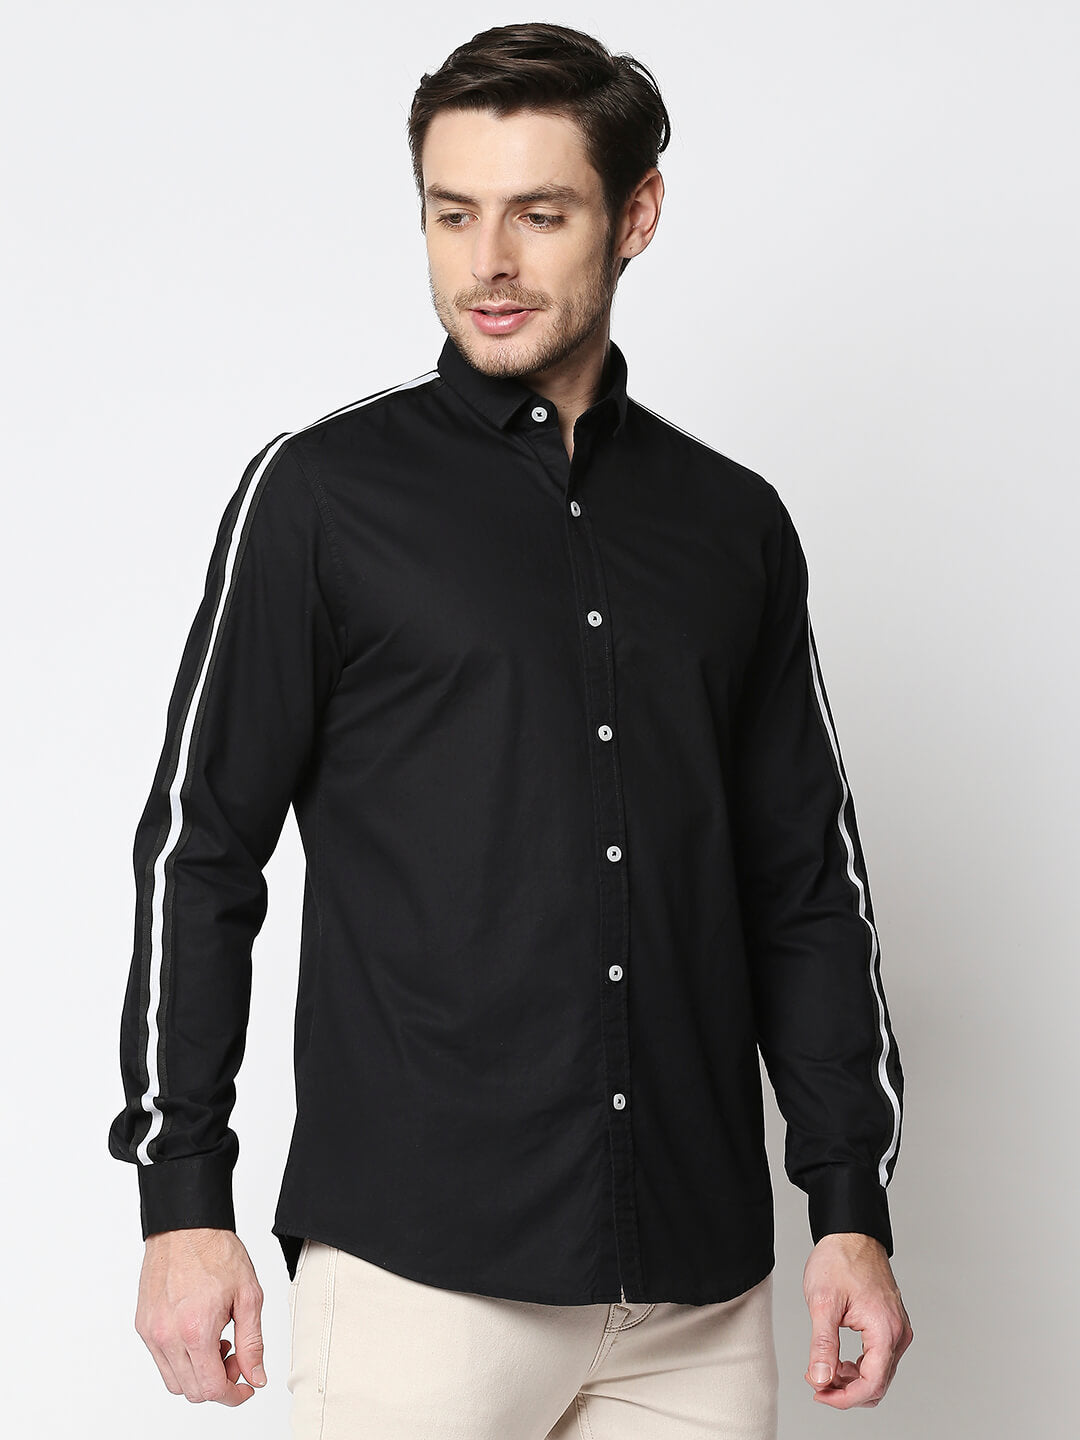 The Manaca Men Partywear Shirt- Black & White Stripe